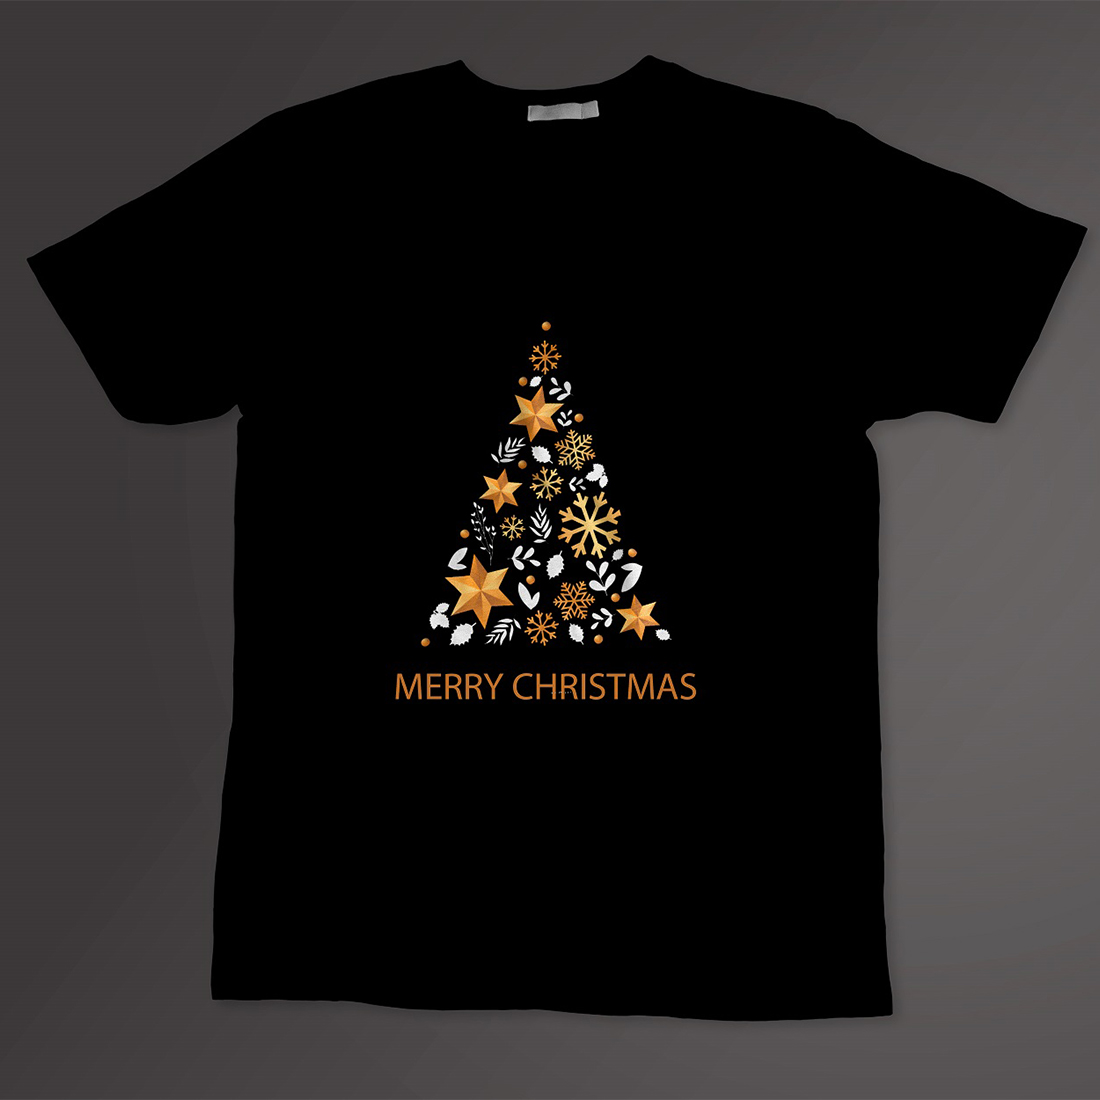 Christmas Tree T- shirts Designs cover image.